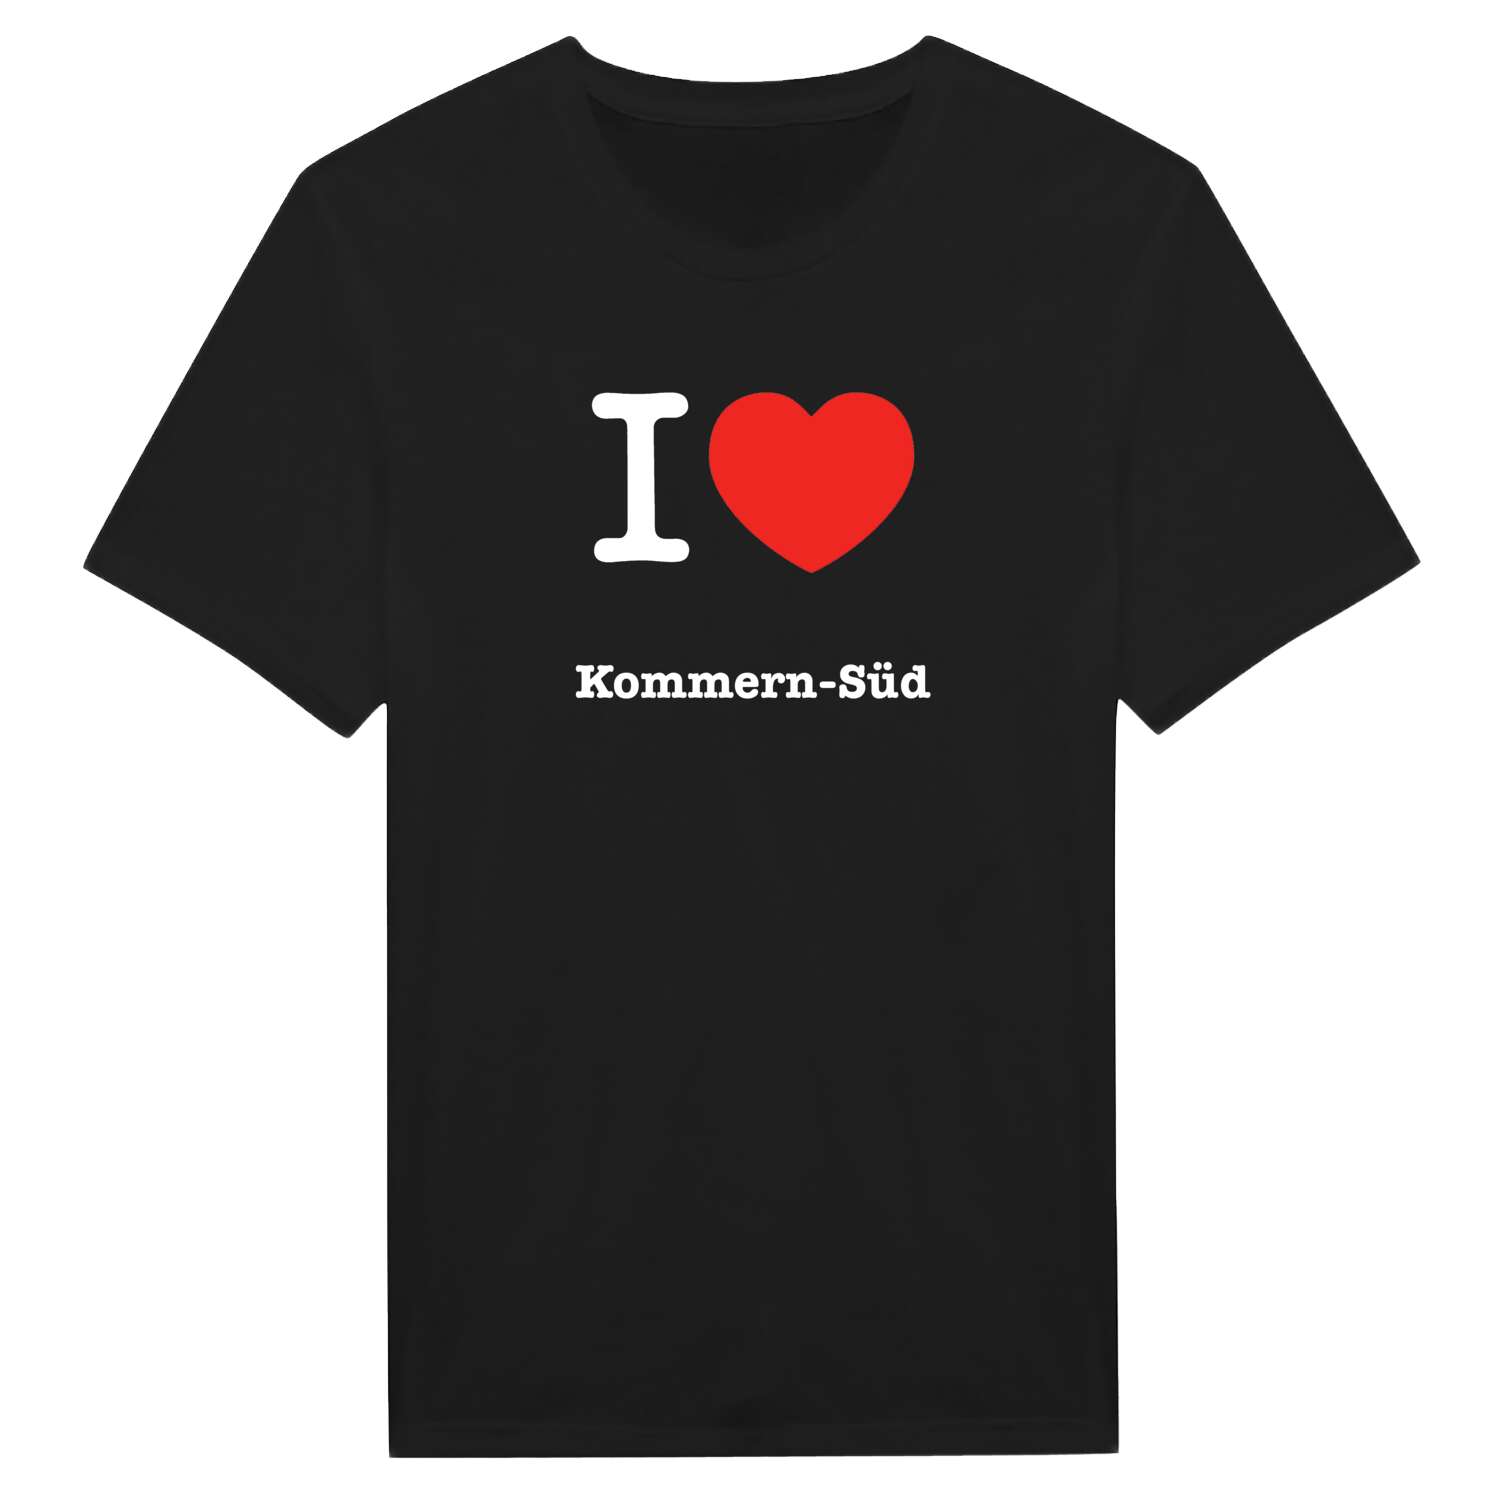 Kommern-Süd T-Shirt »I love«